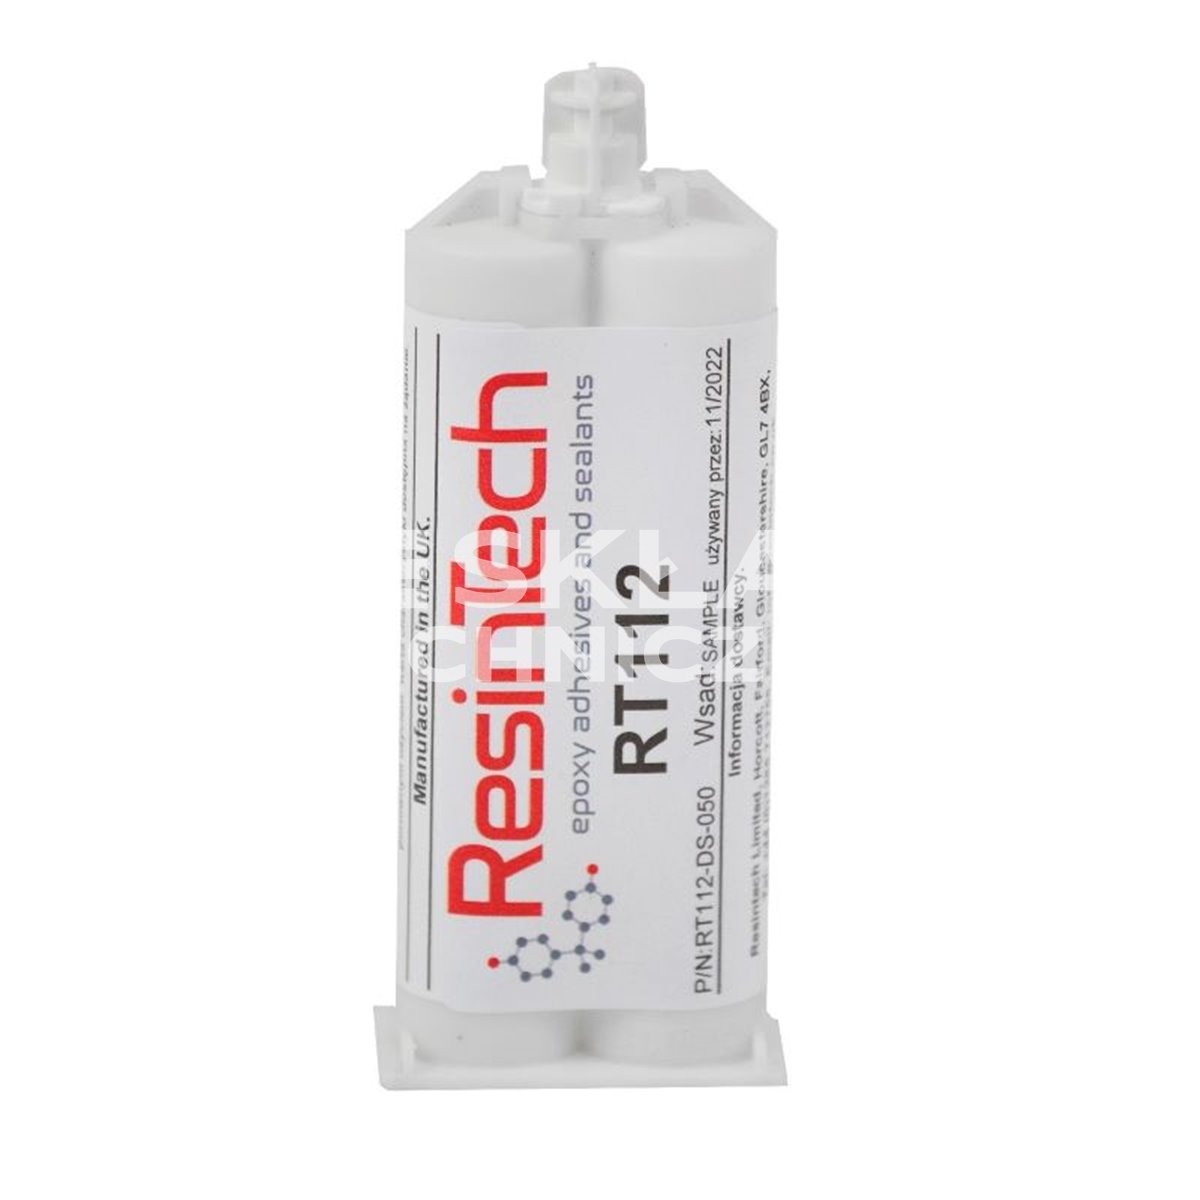 Klej epoksydowy RT112 DuoSyringe 50 ml ResinTech